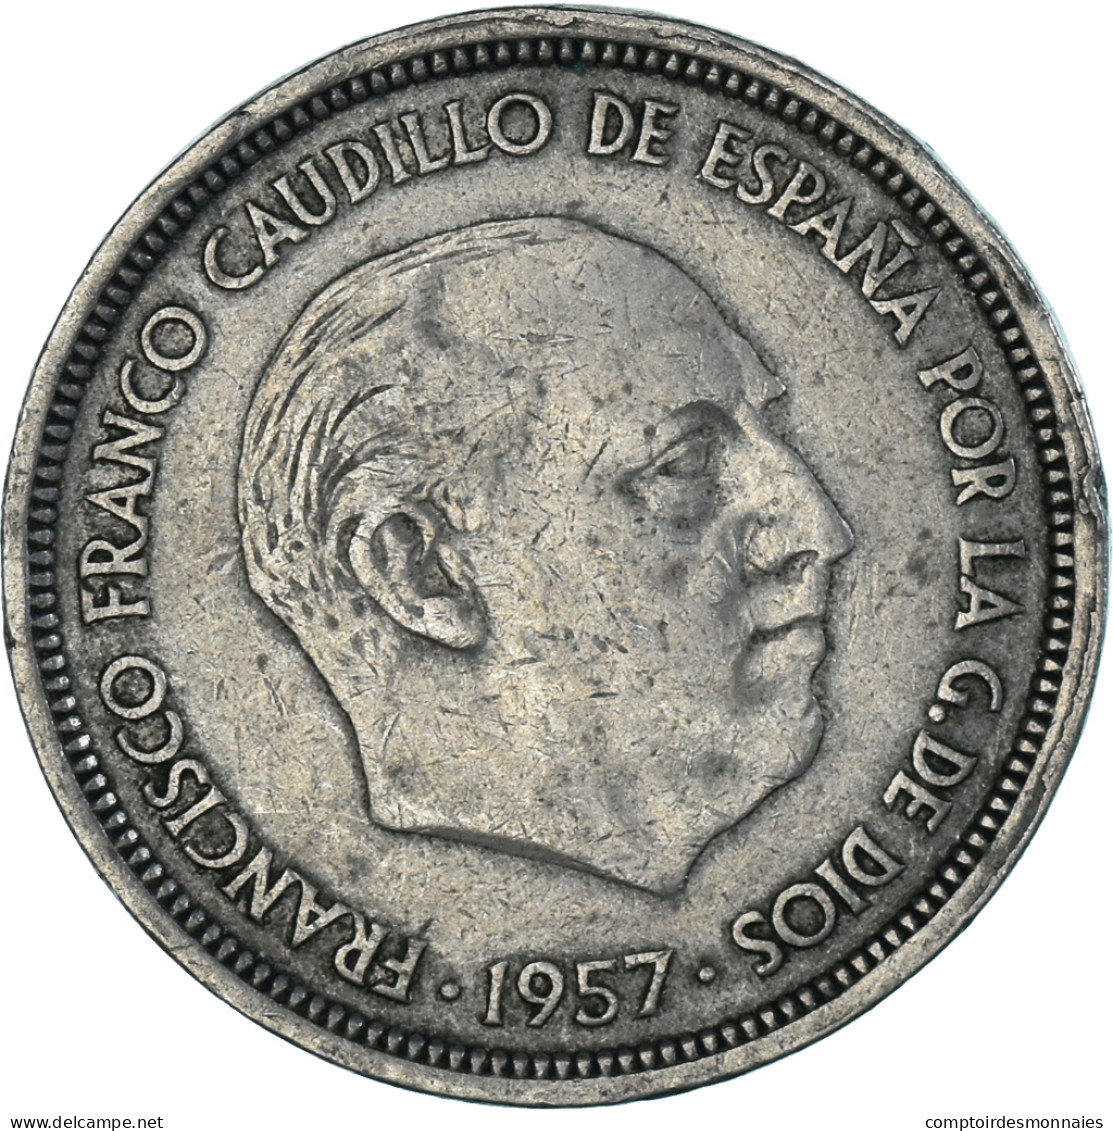 Monnaie, Espagne, 50 Pesetas, 1958 - 50 Pesetas